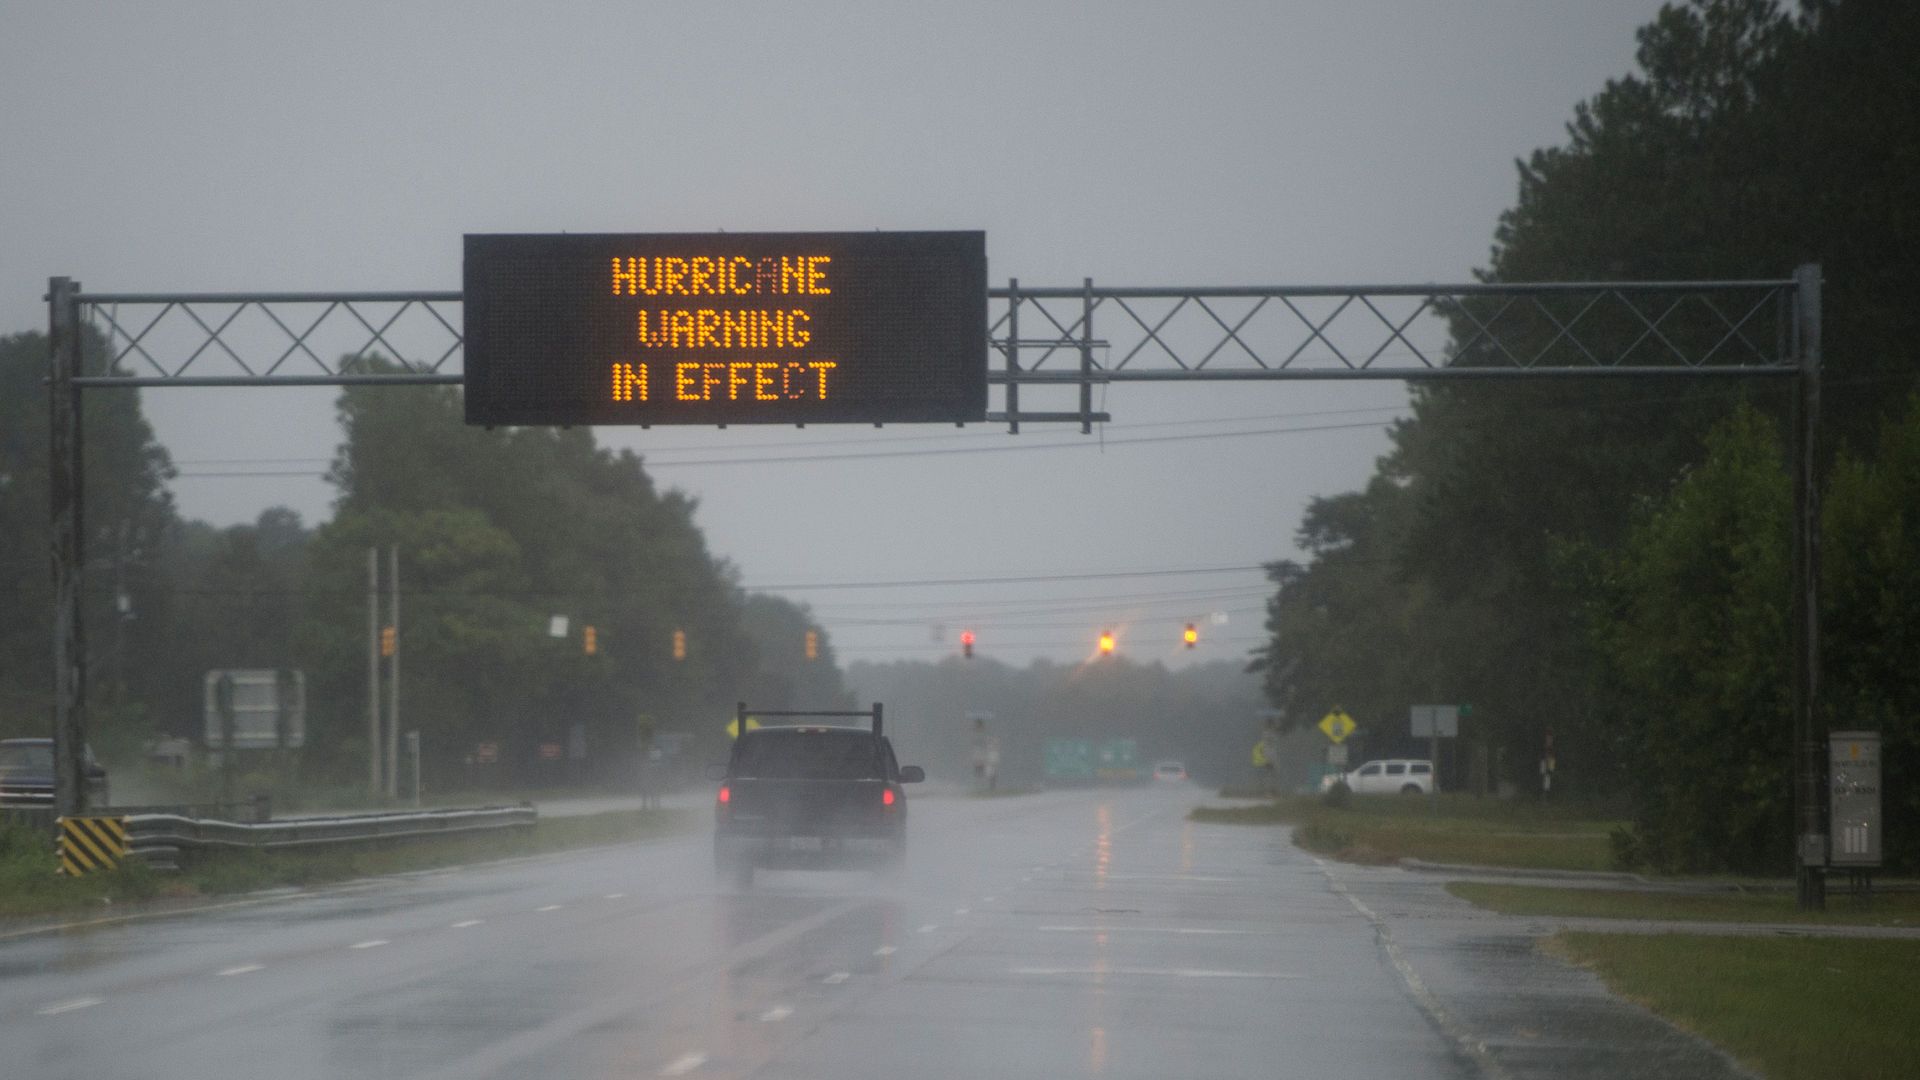 Hurricane warning in effect sign hangs above rainy street